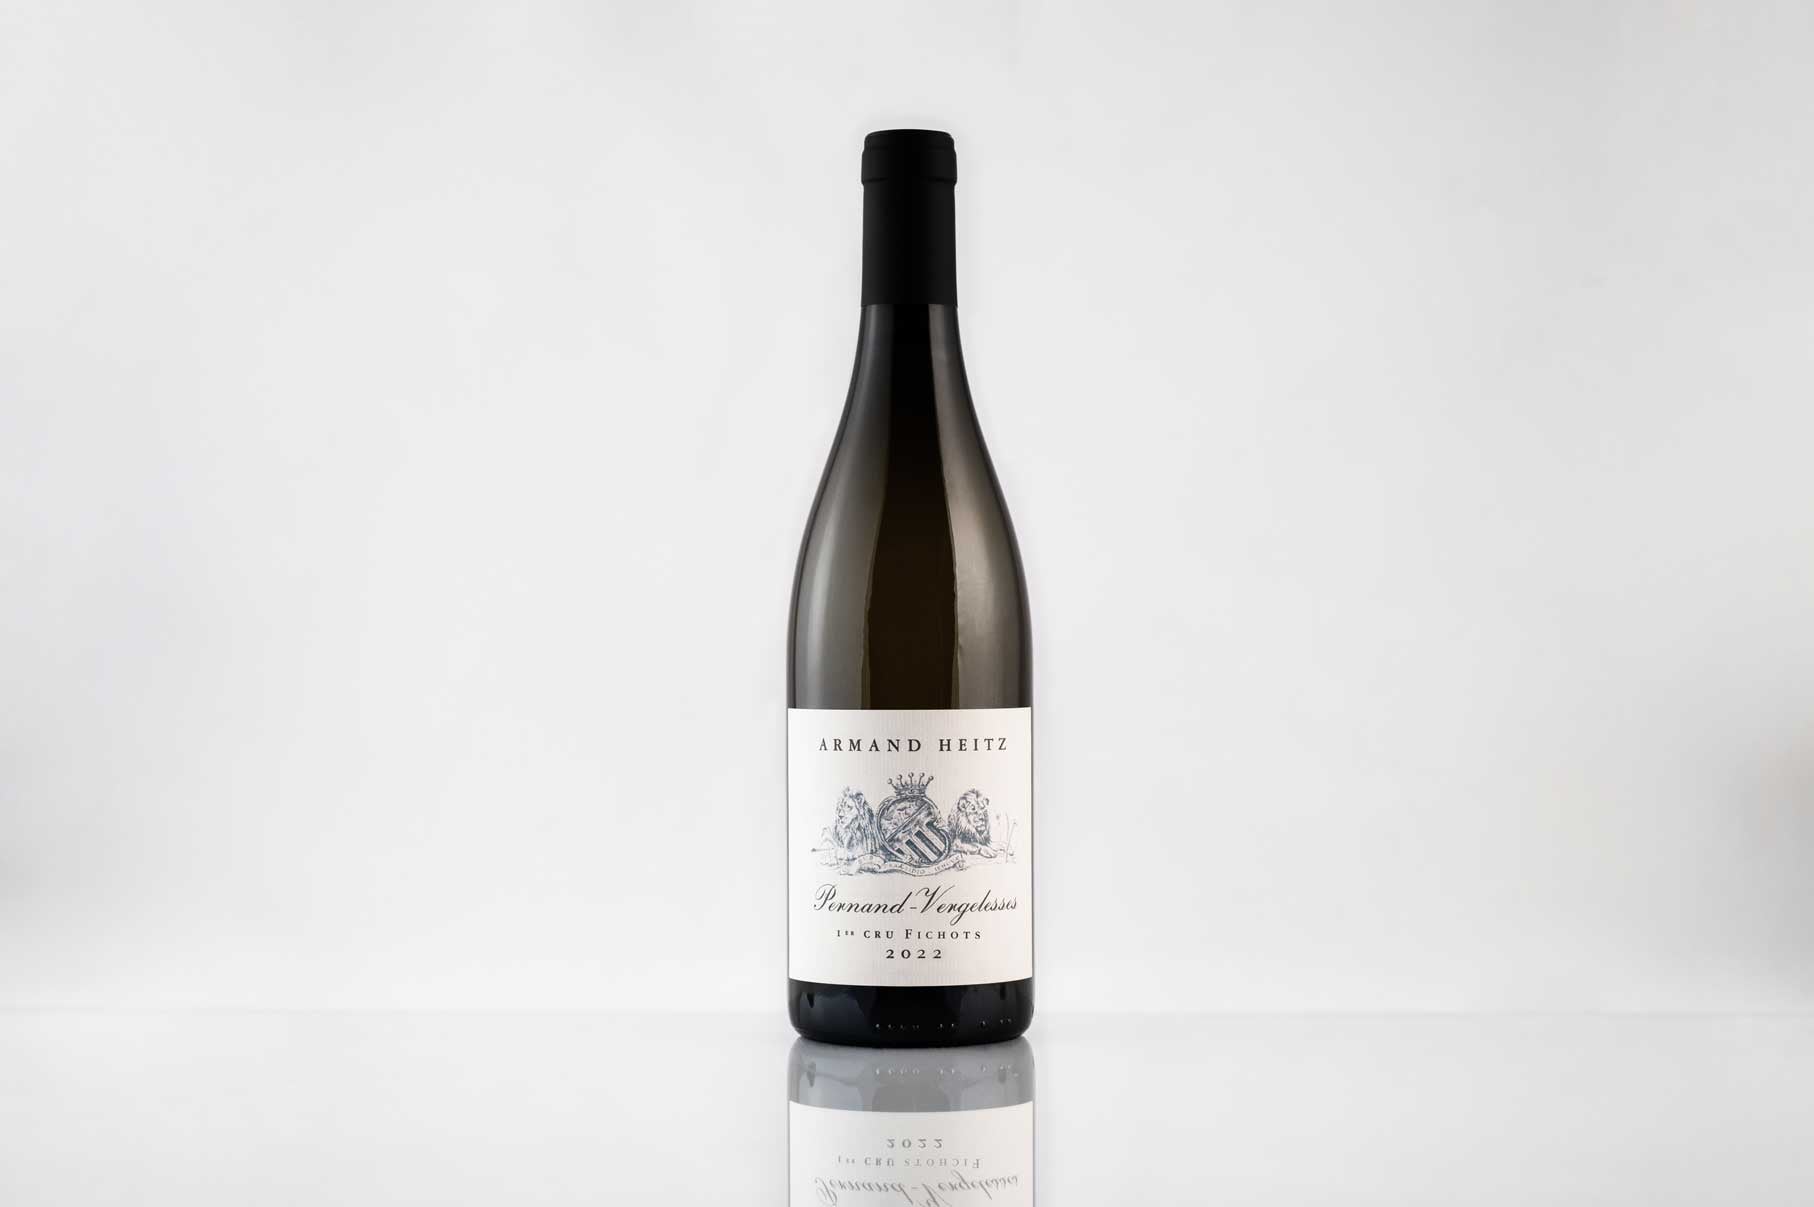 Pernand-Vergelesses 1er Cru Fichots Armand Heitz bouteille vin rouge de Bourgogne